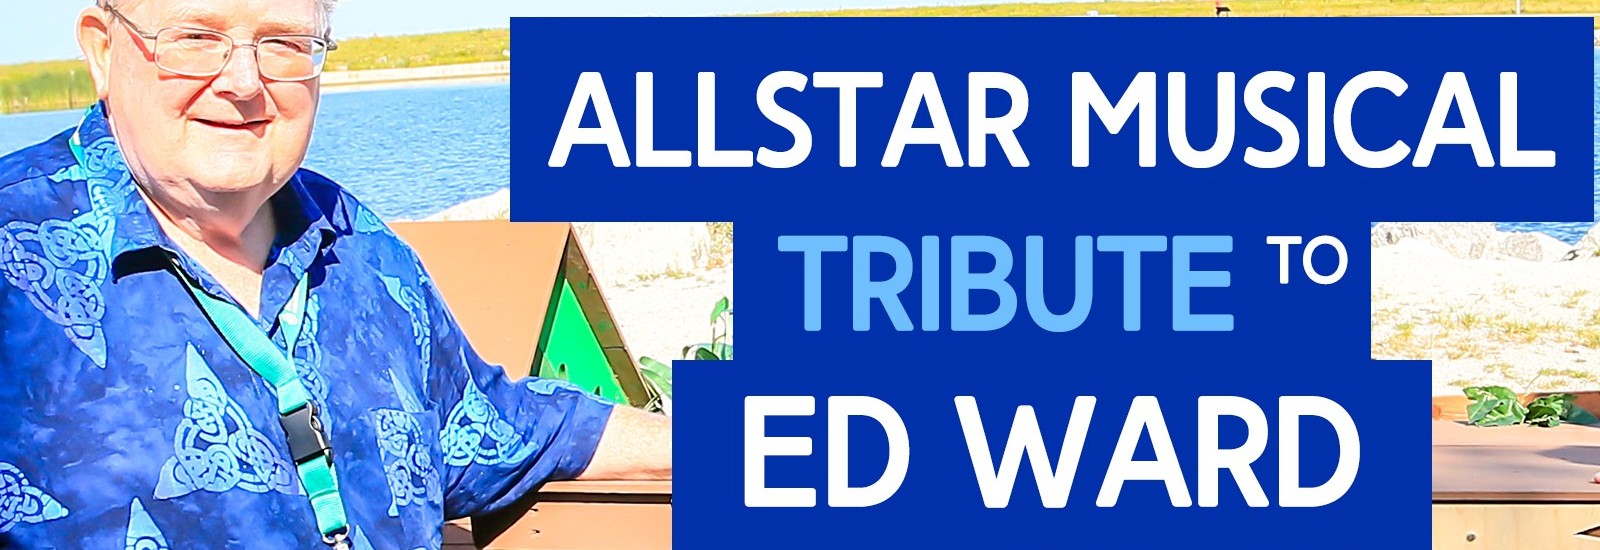 Video Premiere: Allstar Musical Tribute to Ed Ward